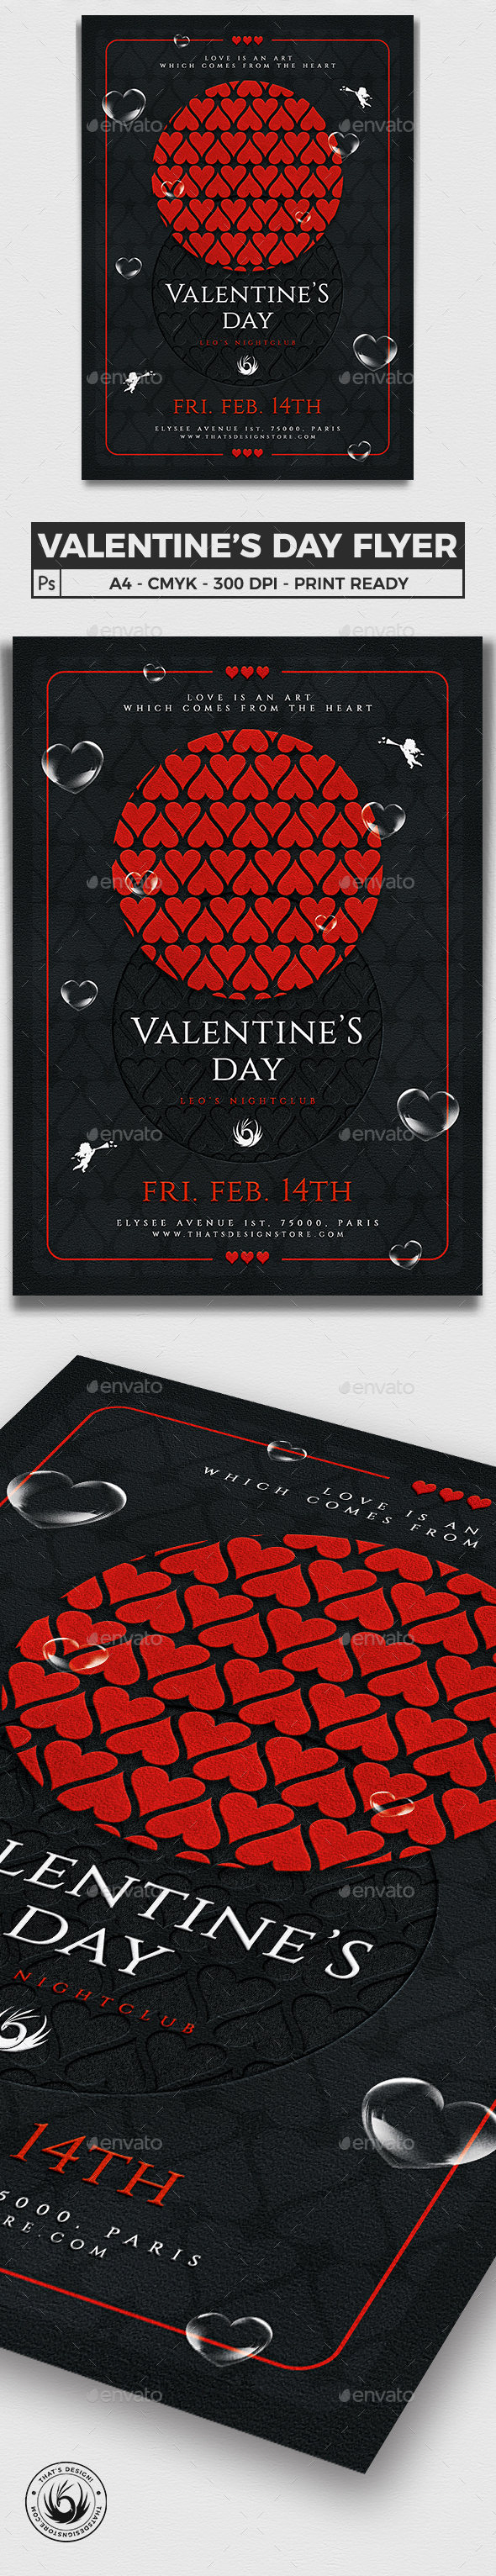 Valentines Day Flyer Template V22